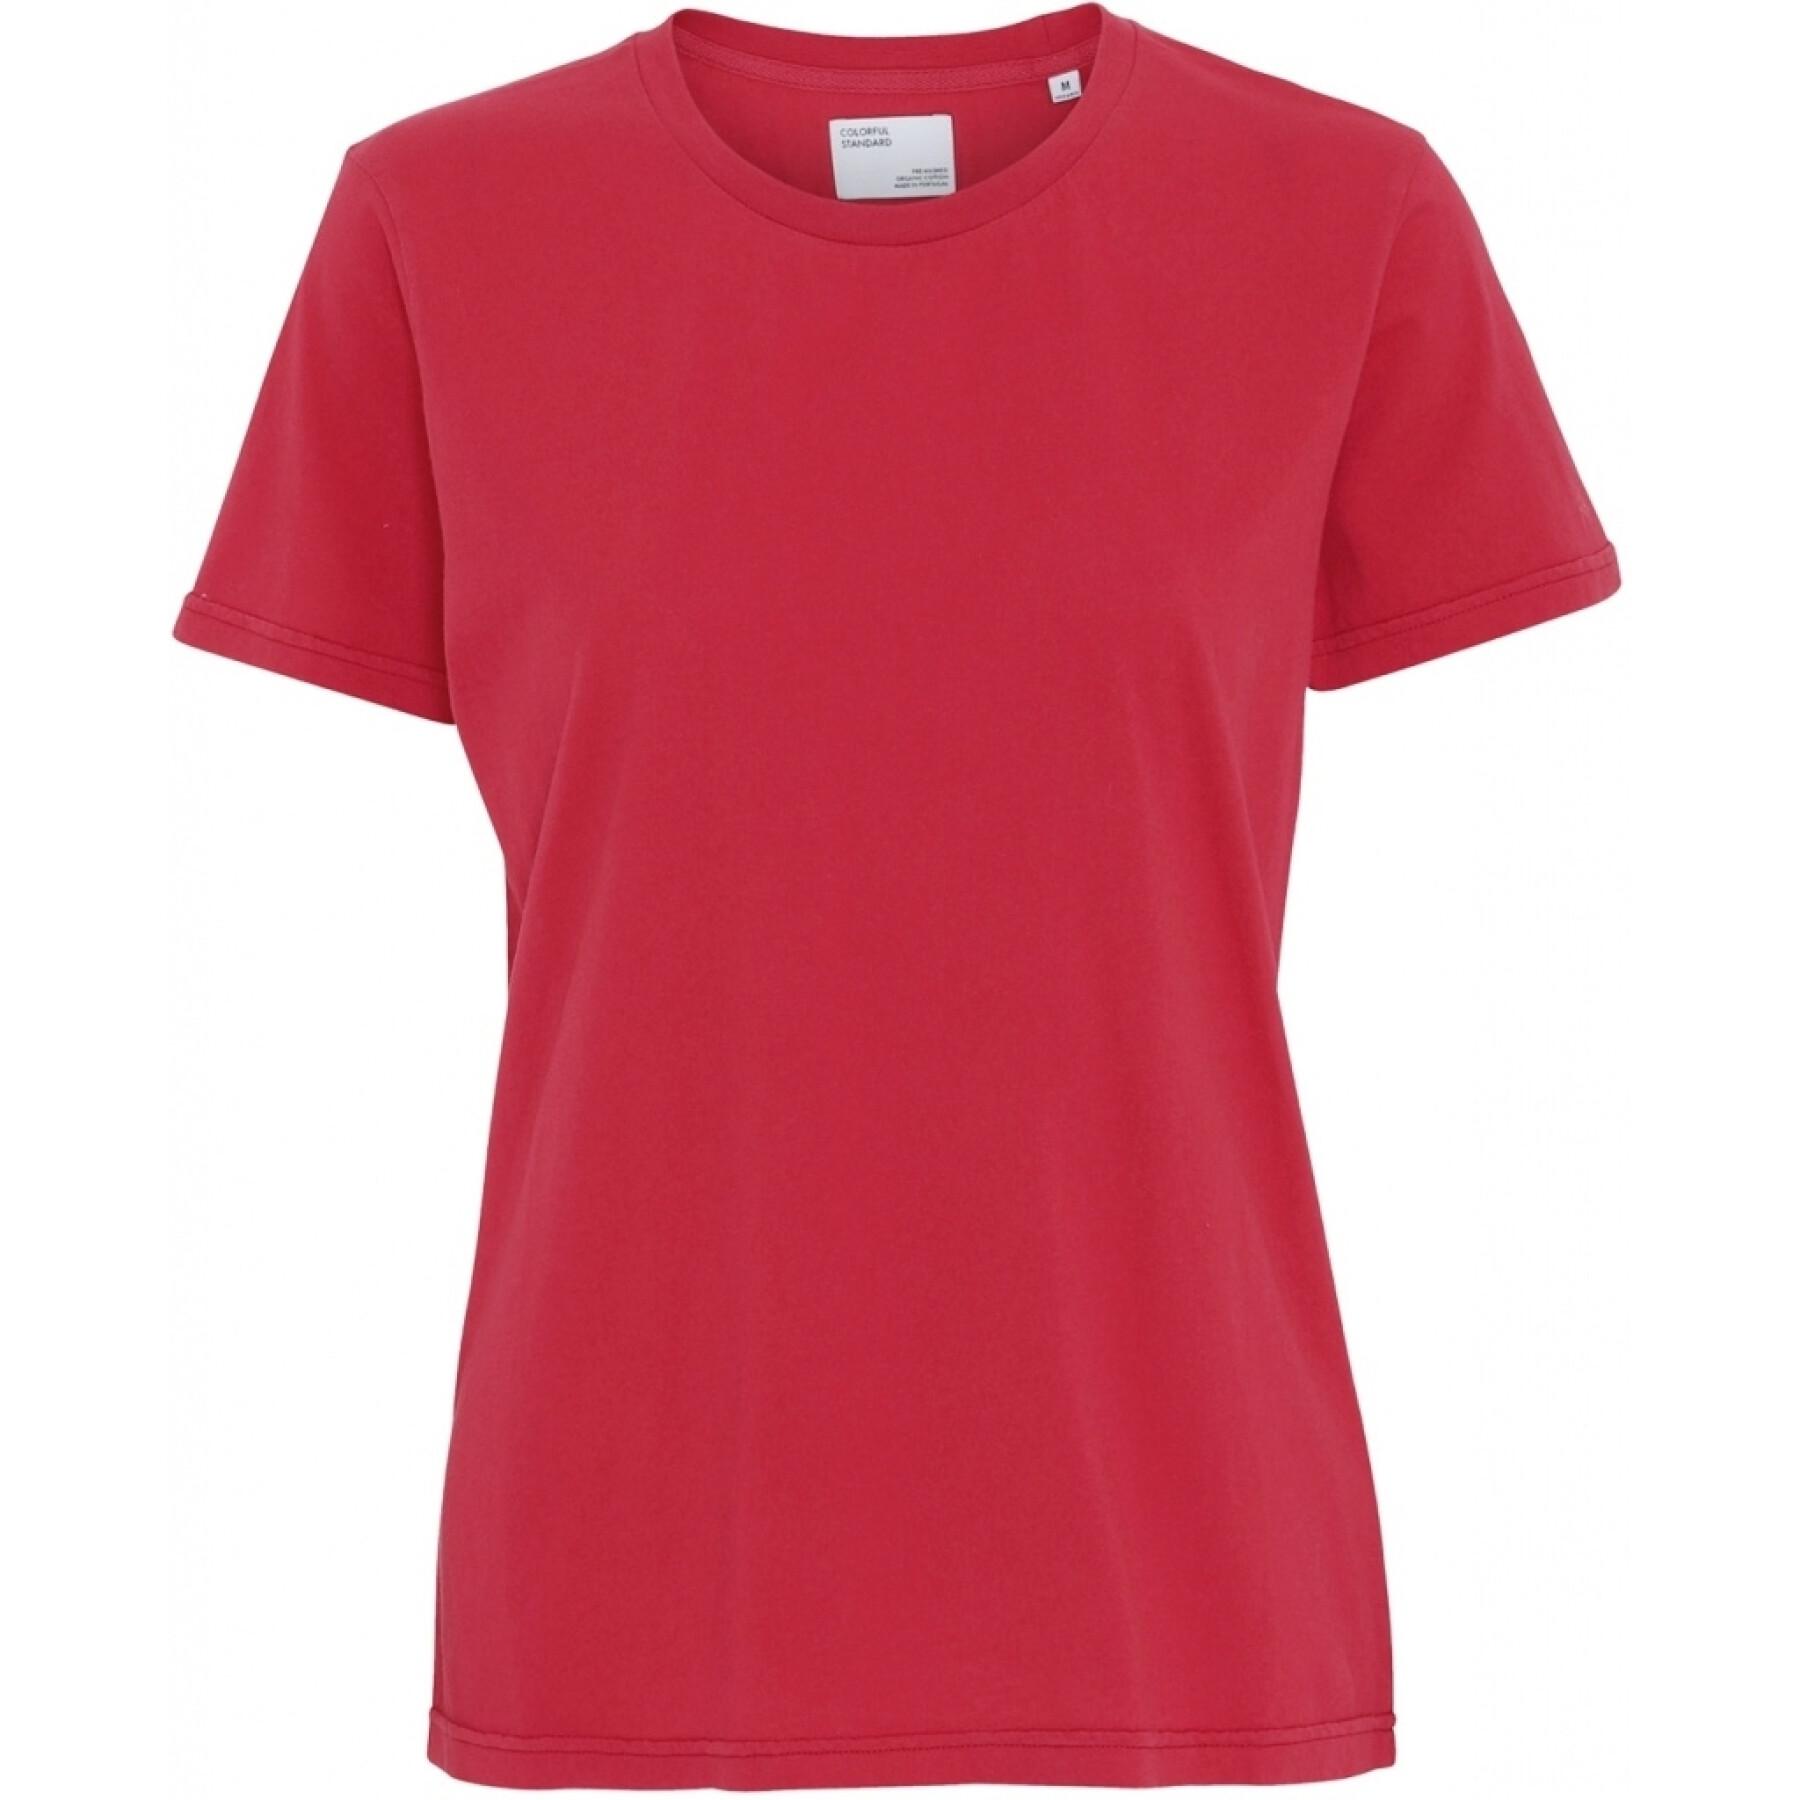 Camiseta de mujer Colorful Standard Light Organic scarlet red